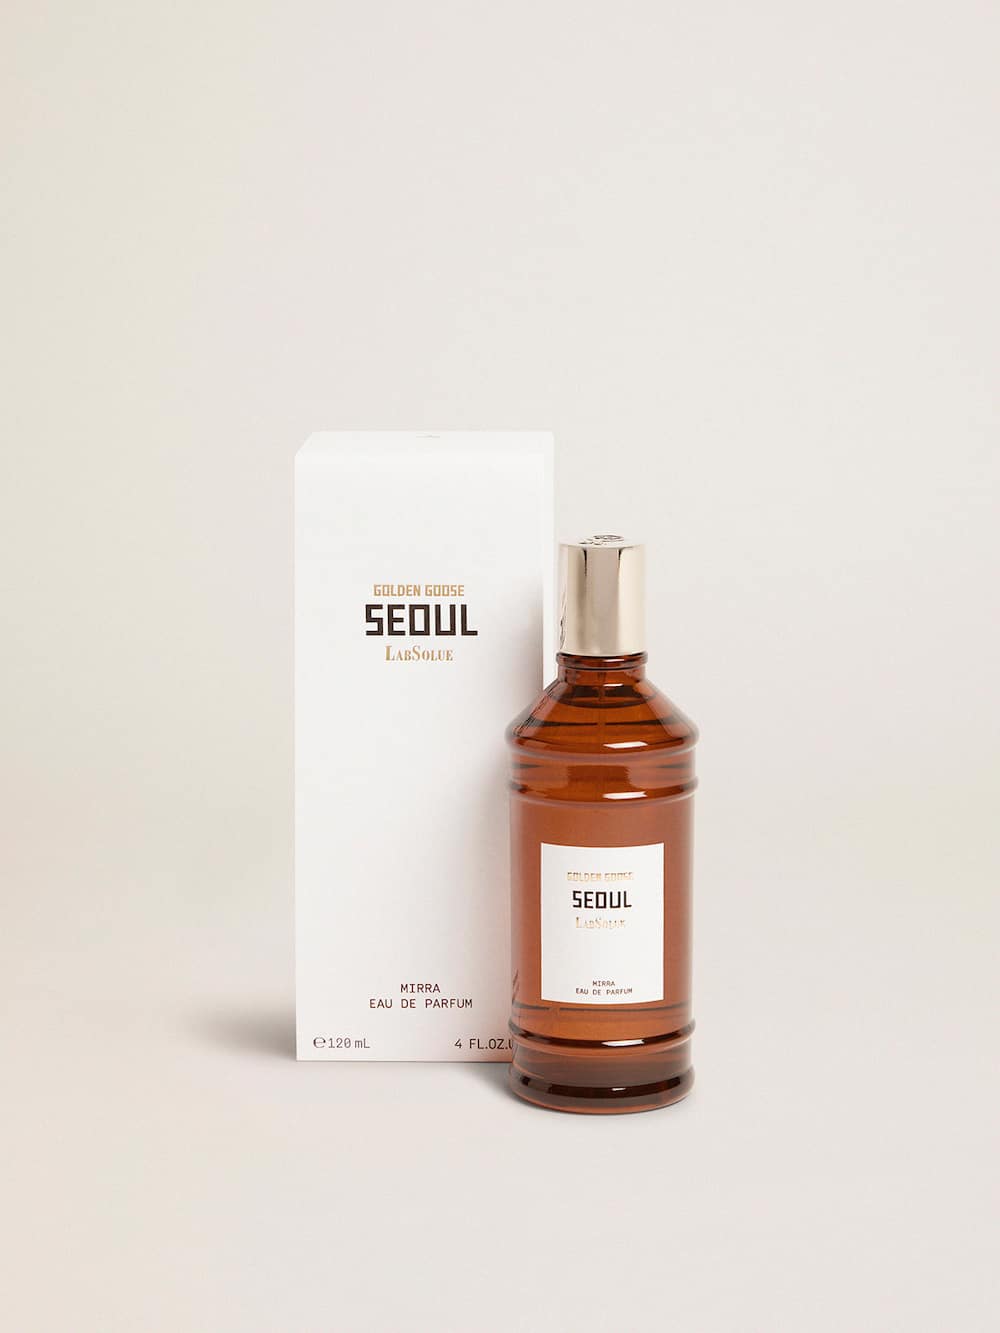 Golden Goose - Seoul Essence Myrrhe Eau de Parfum 120 ml in 